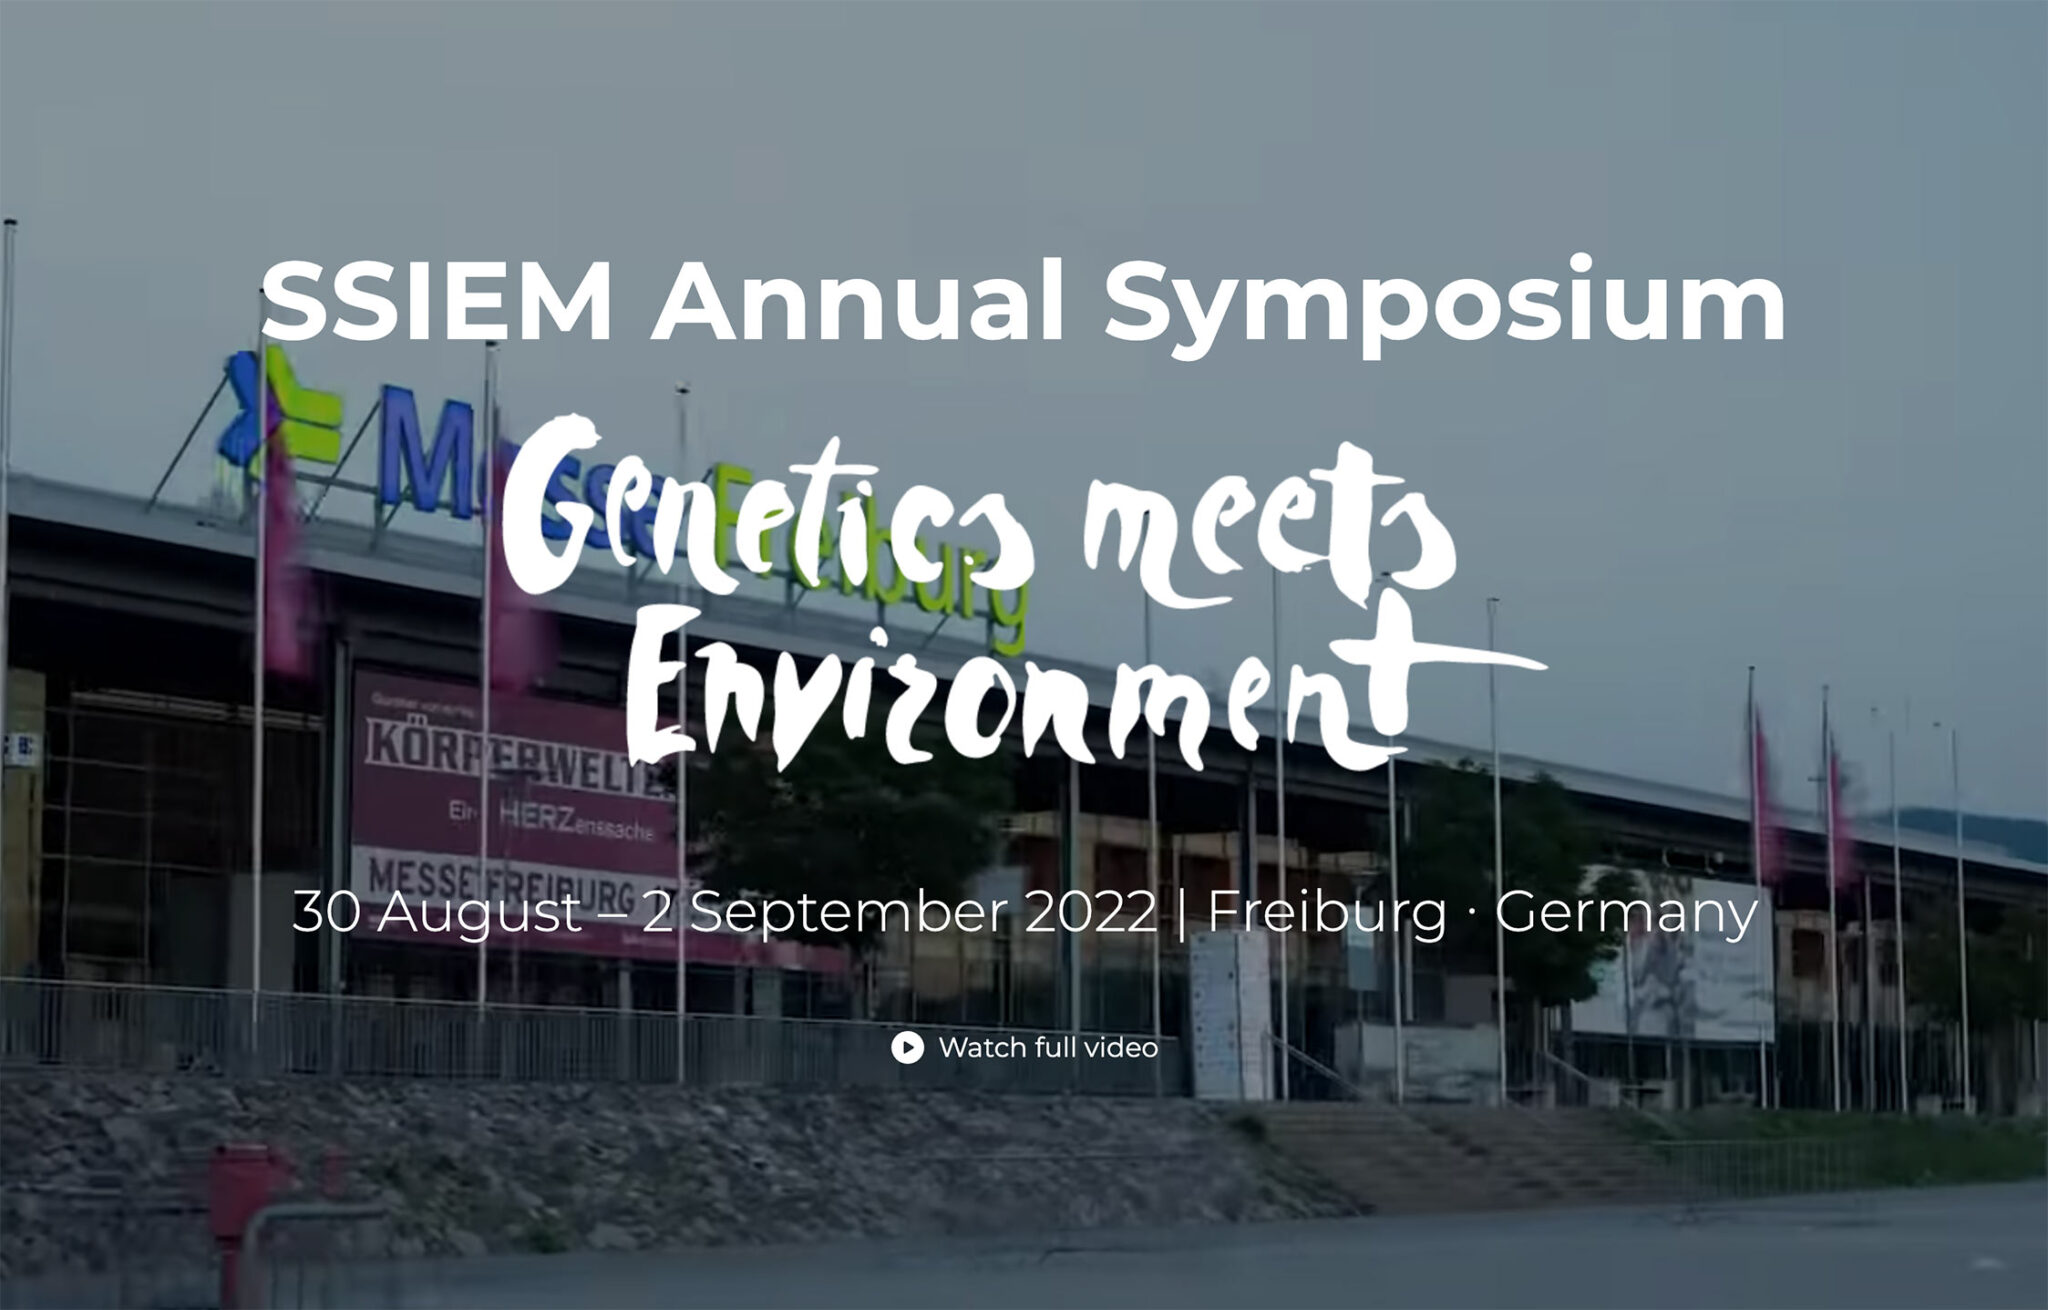 SSIEM Annual Symposium 2022 metabolics.be